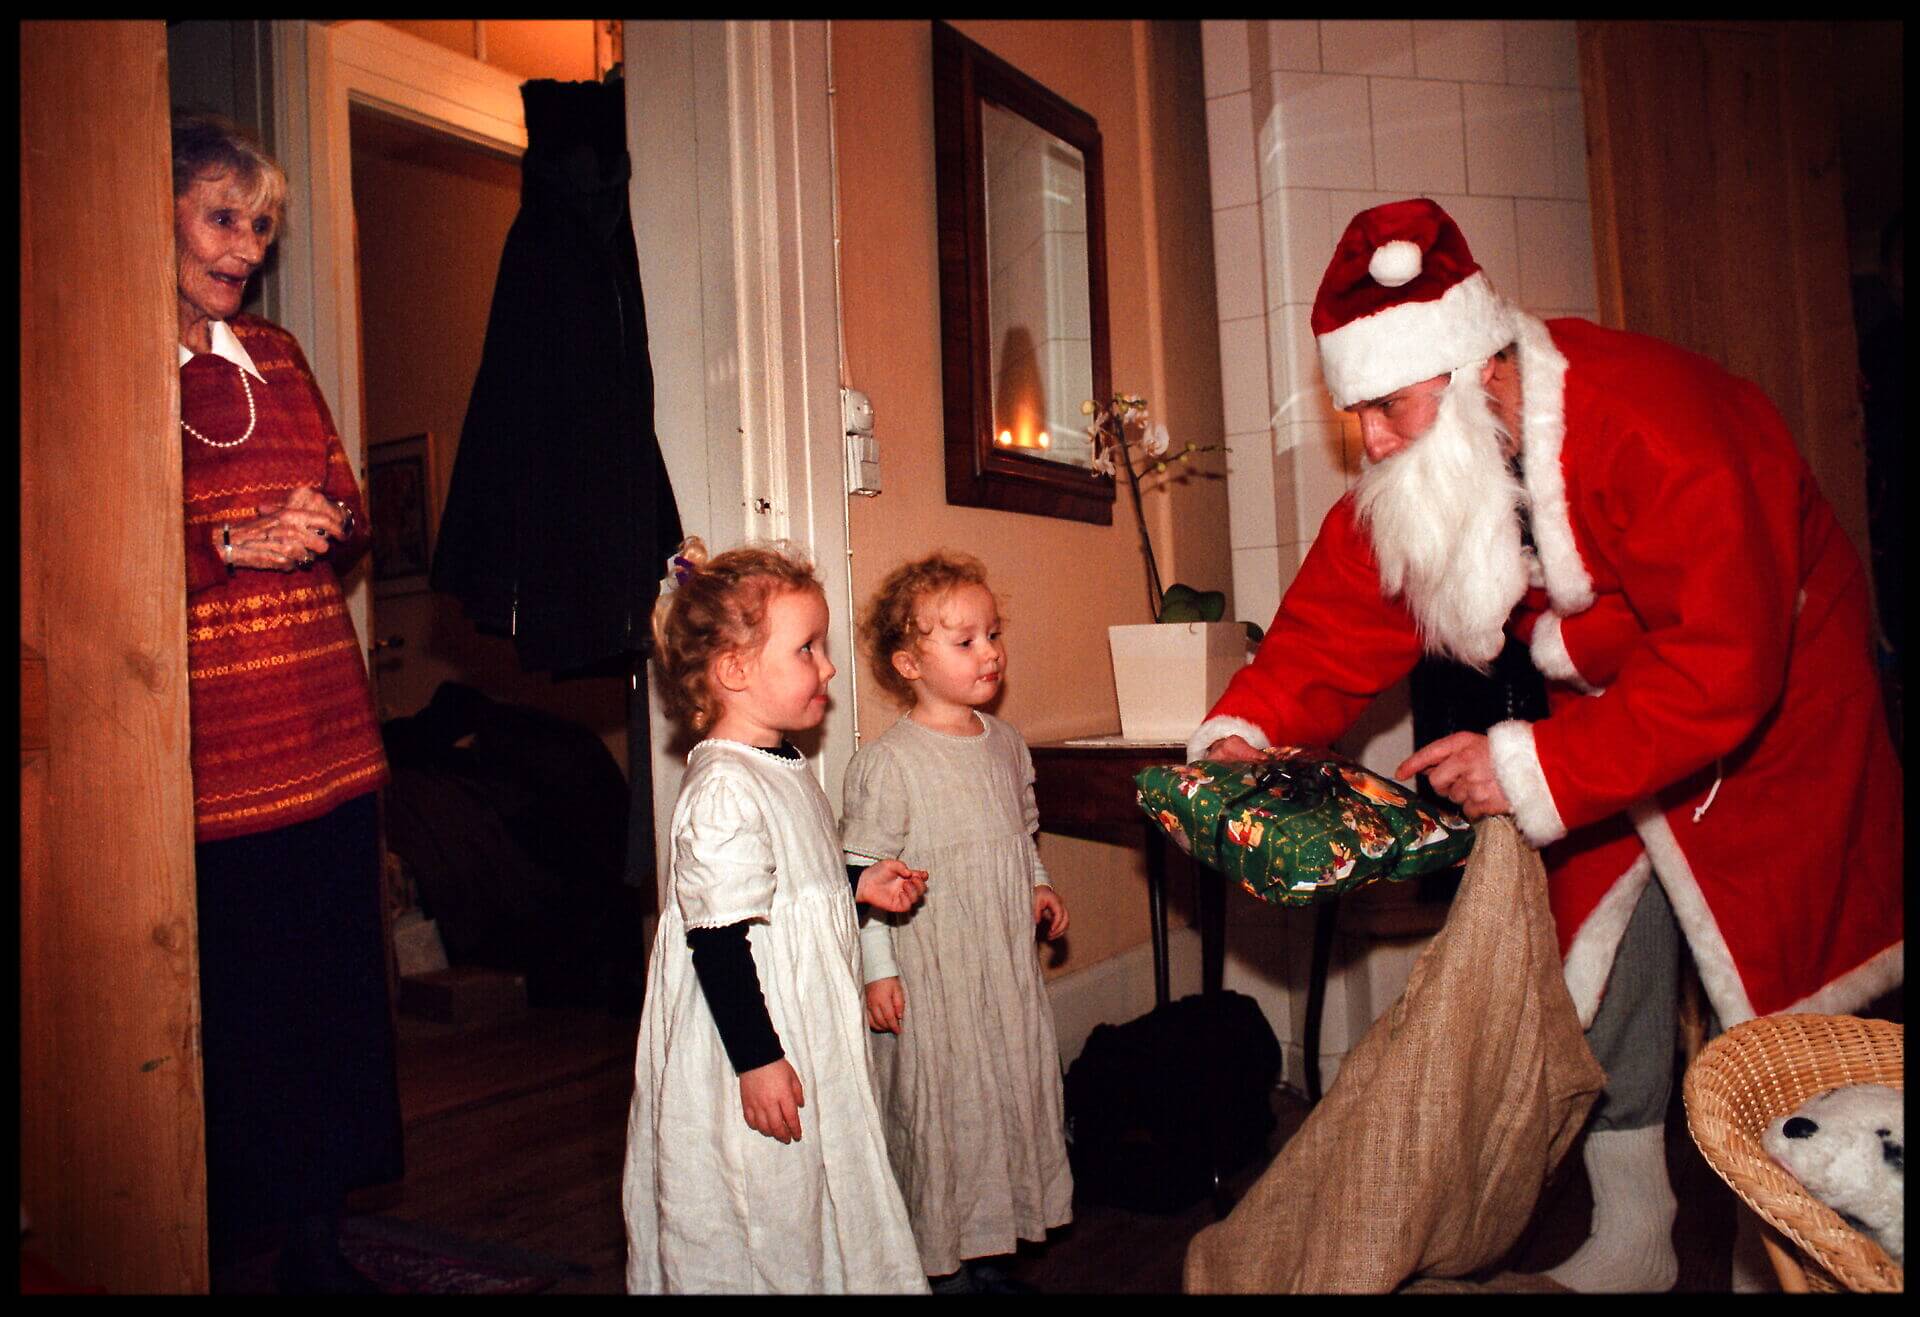 Father Christmas, Julemand, handing out Christmas presents